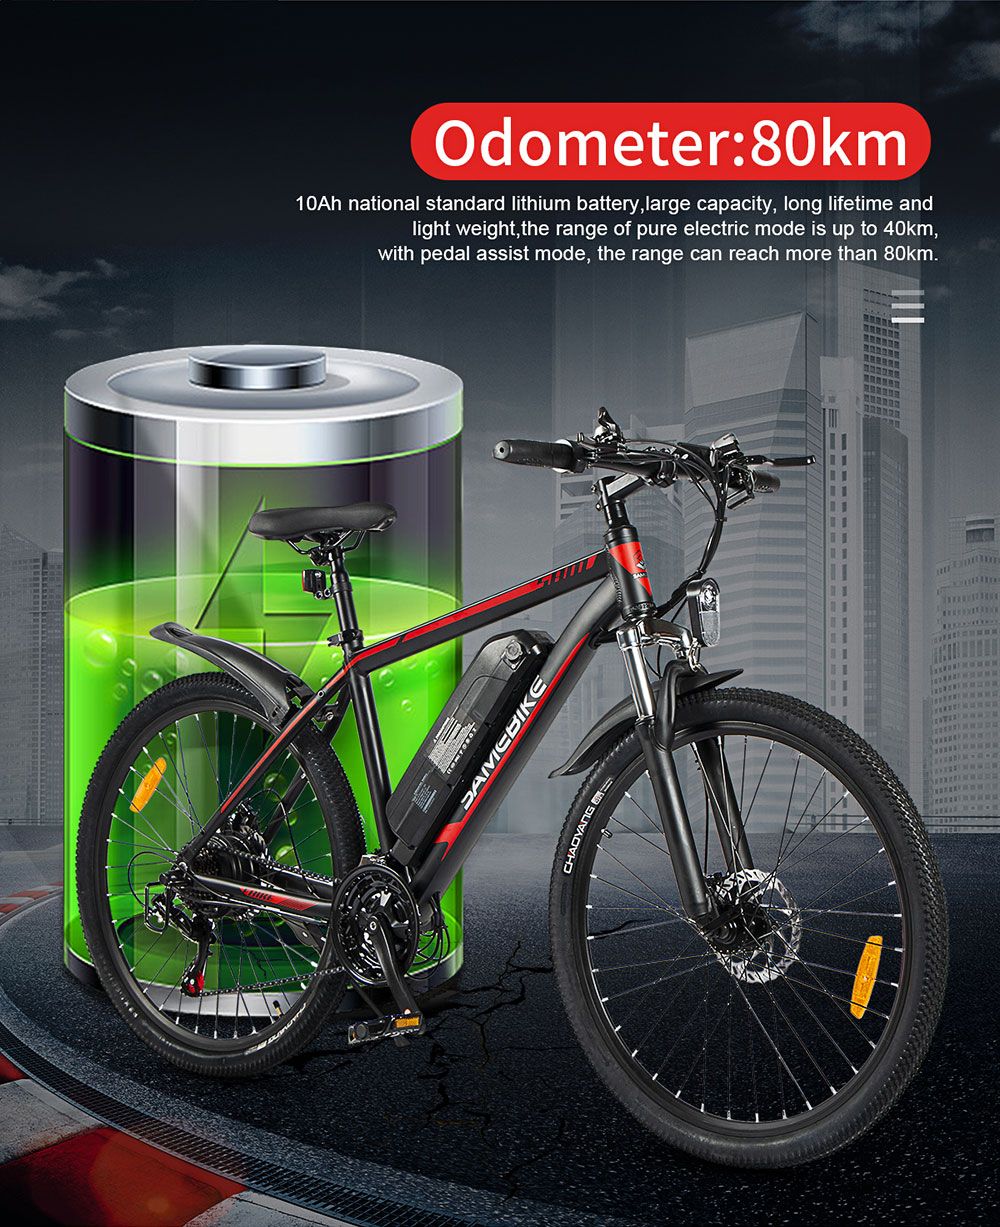 Elektromos kerékpár SAMEBIKE SY26 350W 35km/h 36V 10Ah fekete